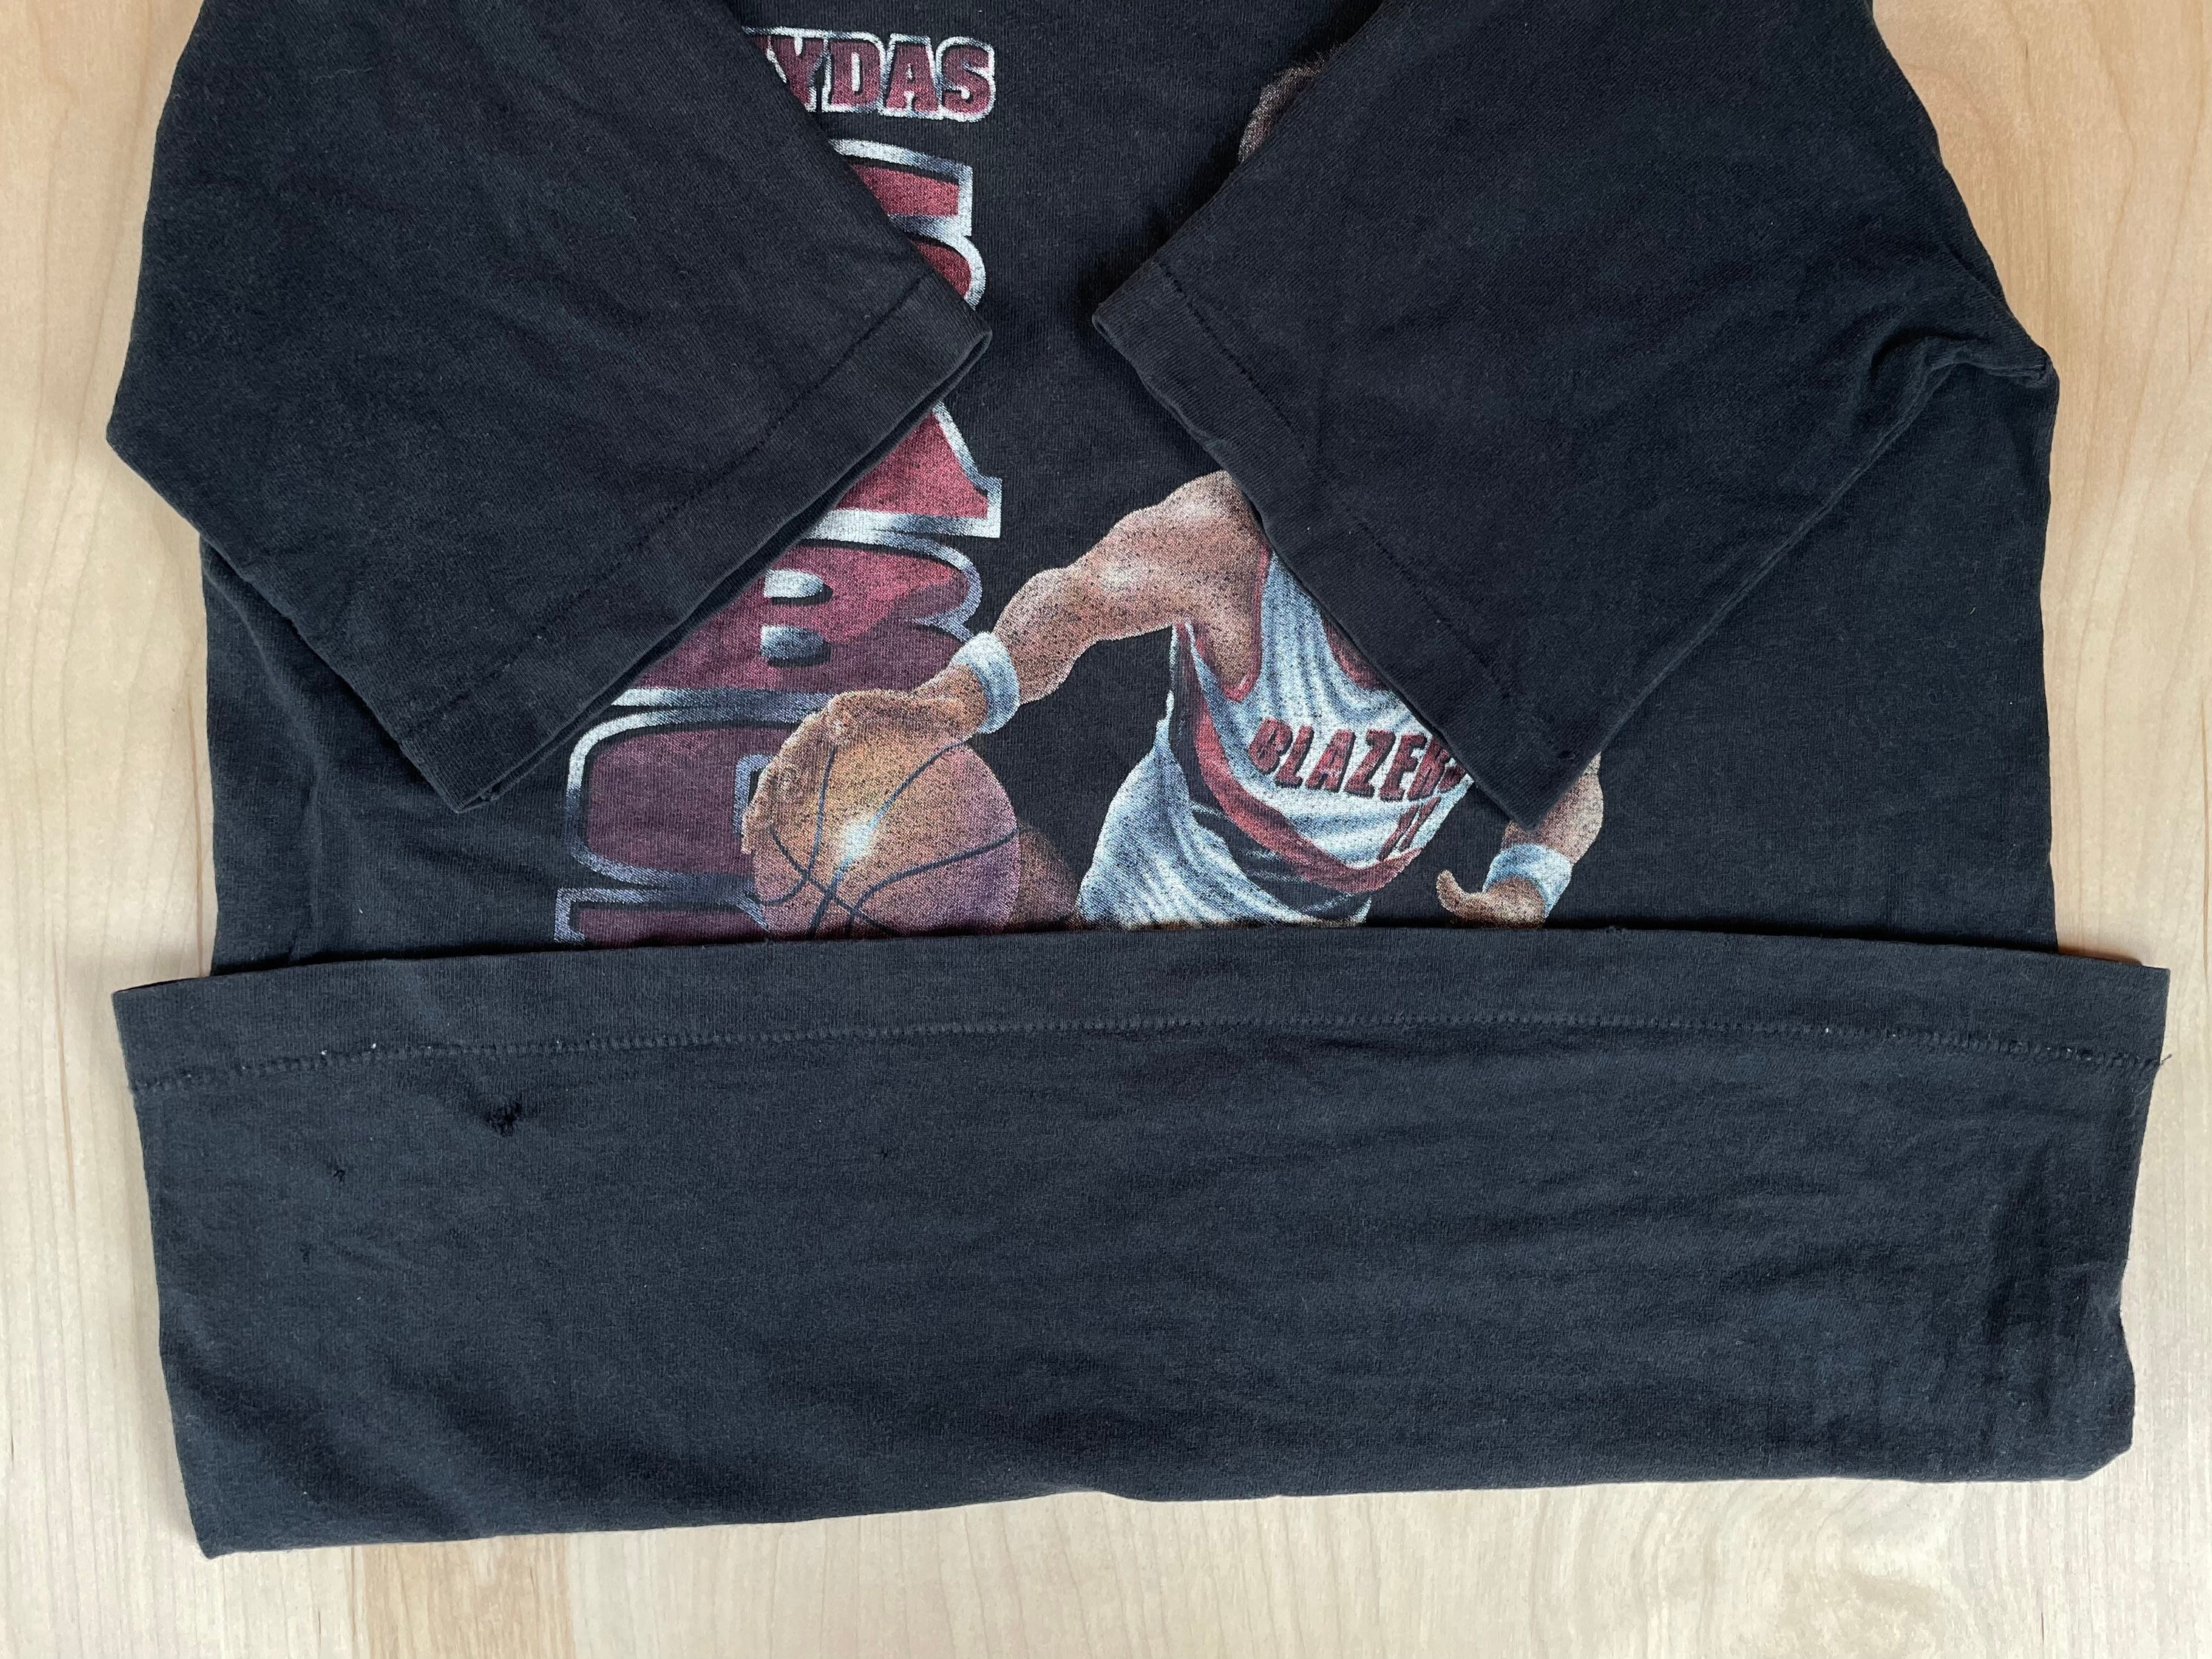 Arvydas Sabonis Portland Trail Blazer Basketball shirt - Dalatshirt